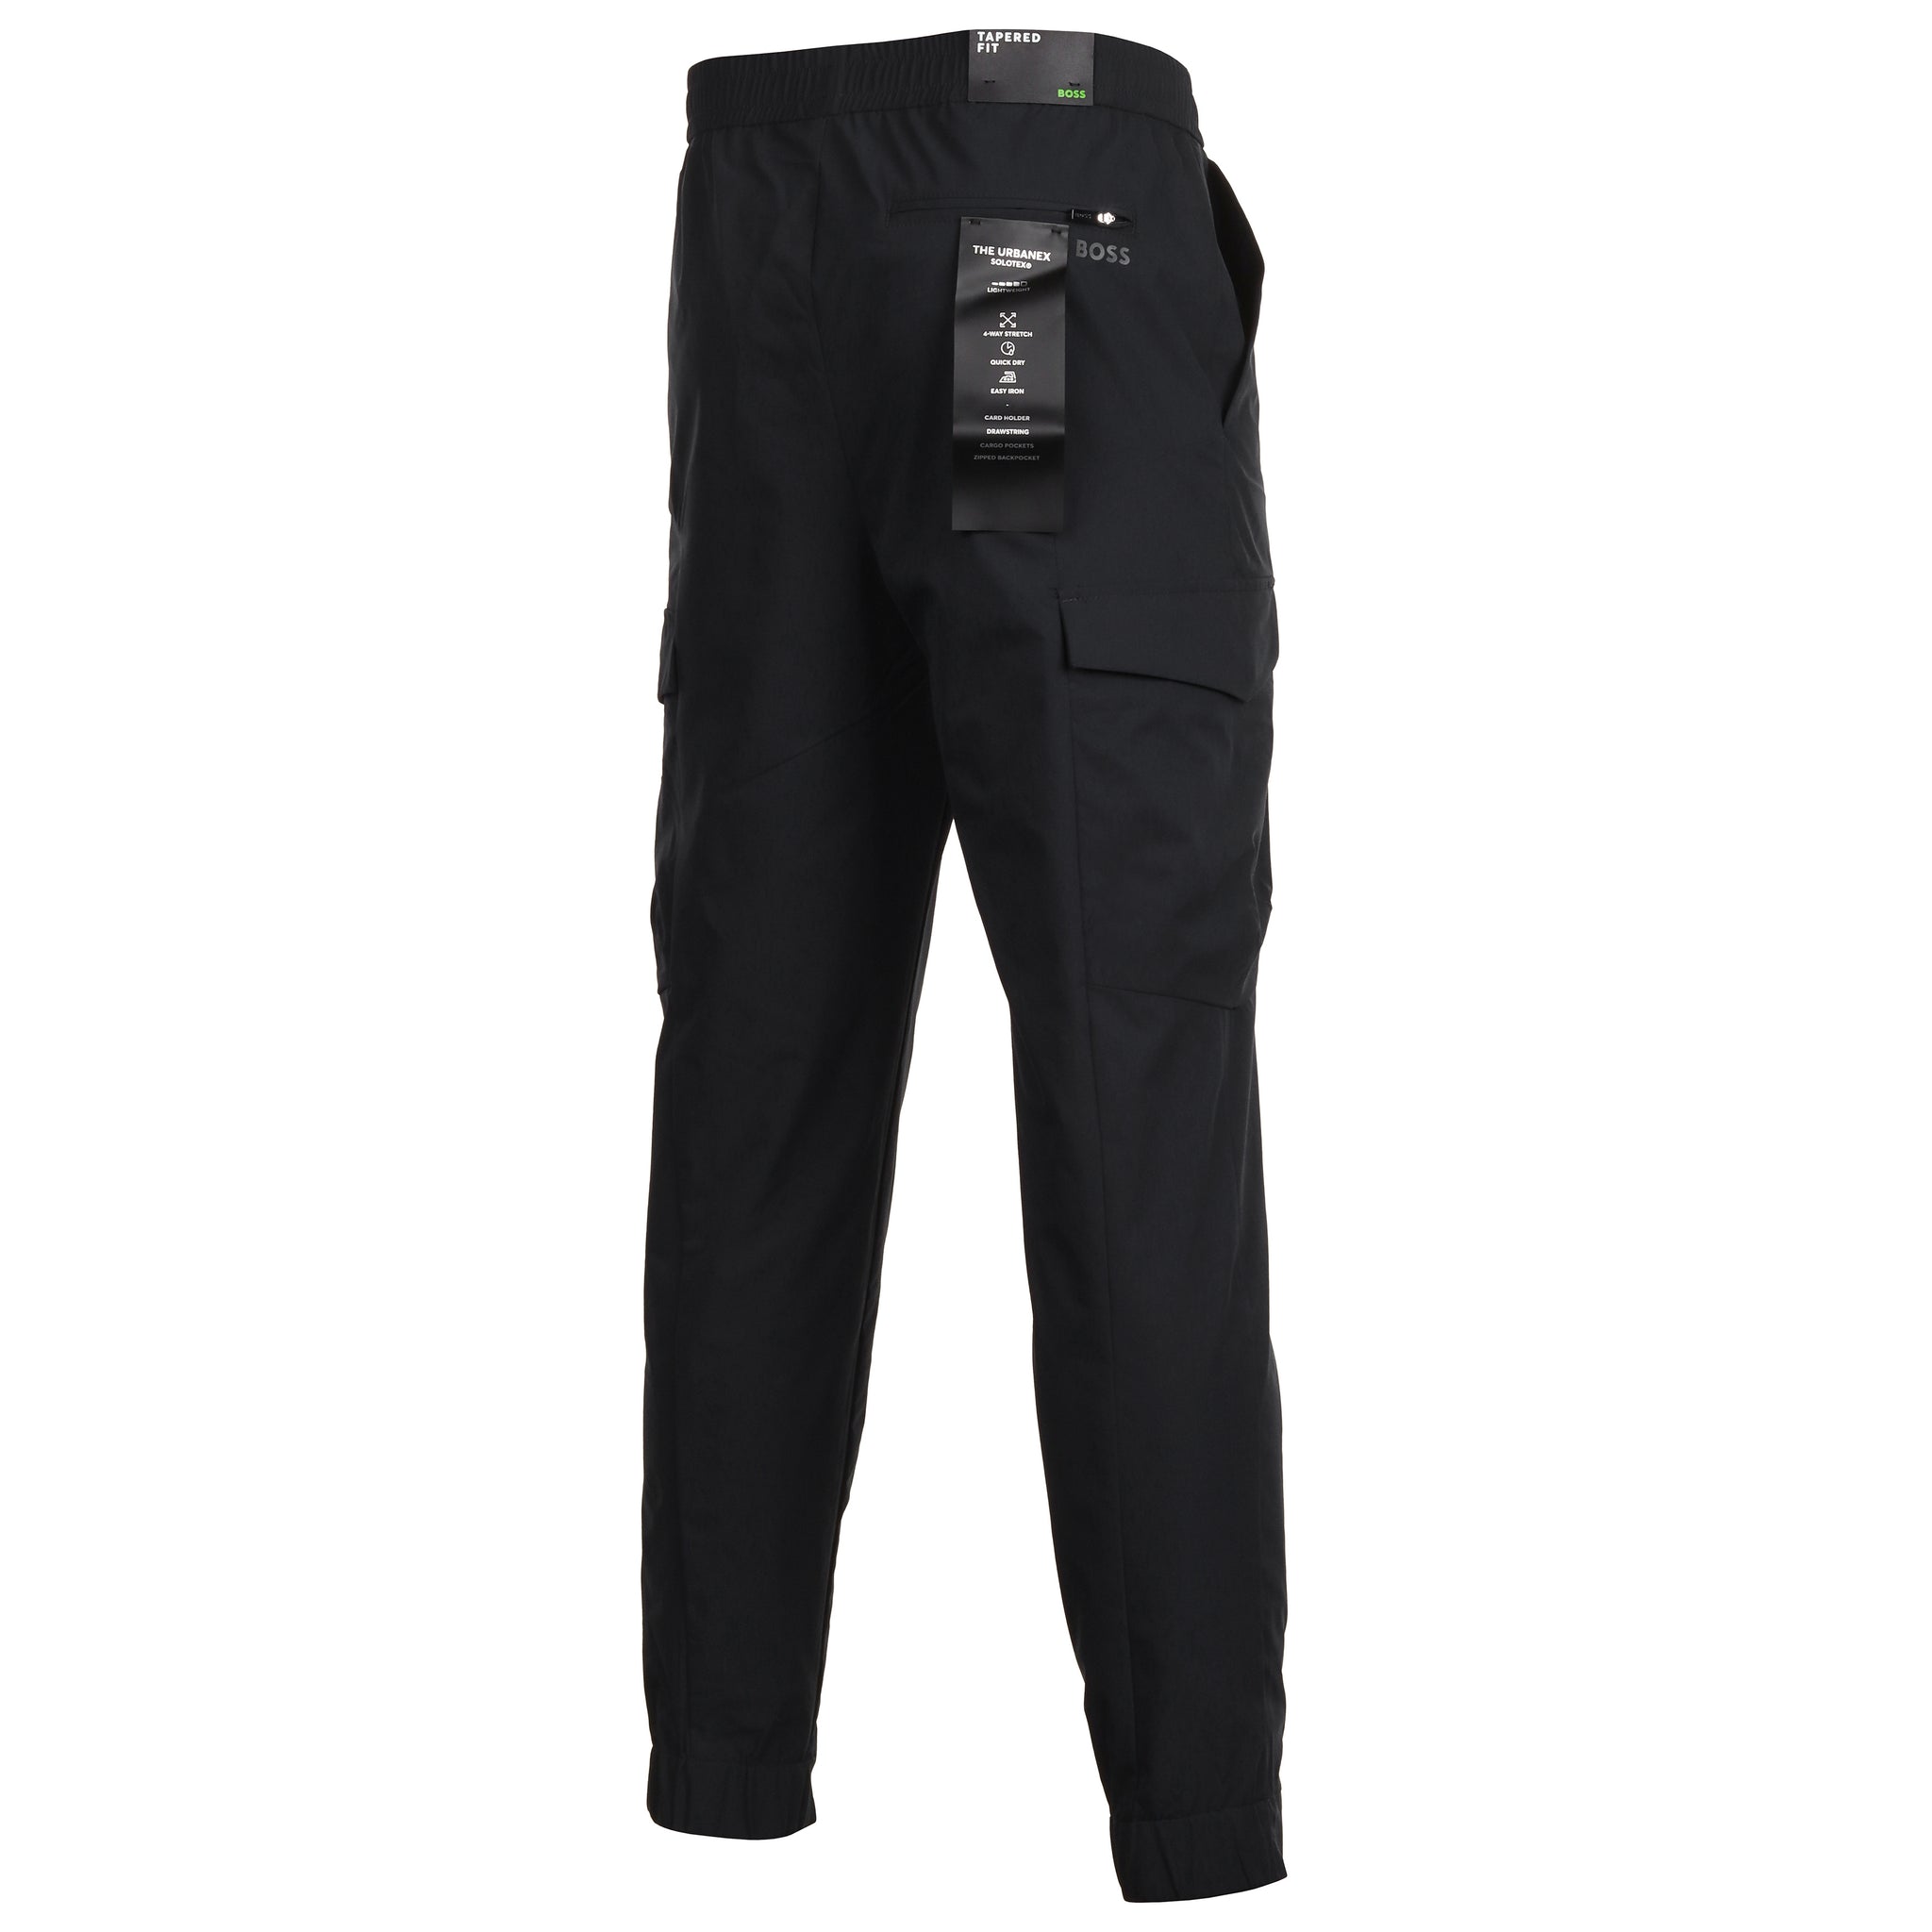 boss-t_urbanex-cargo-light-golf-trousers-50508339-black-001